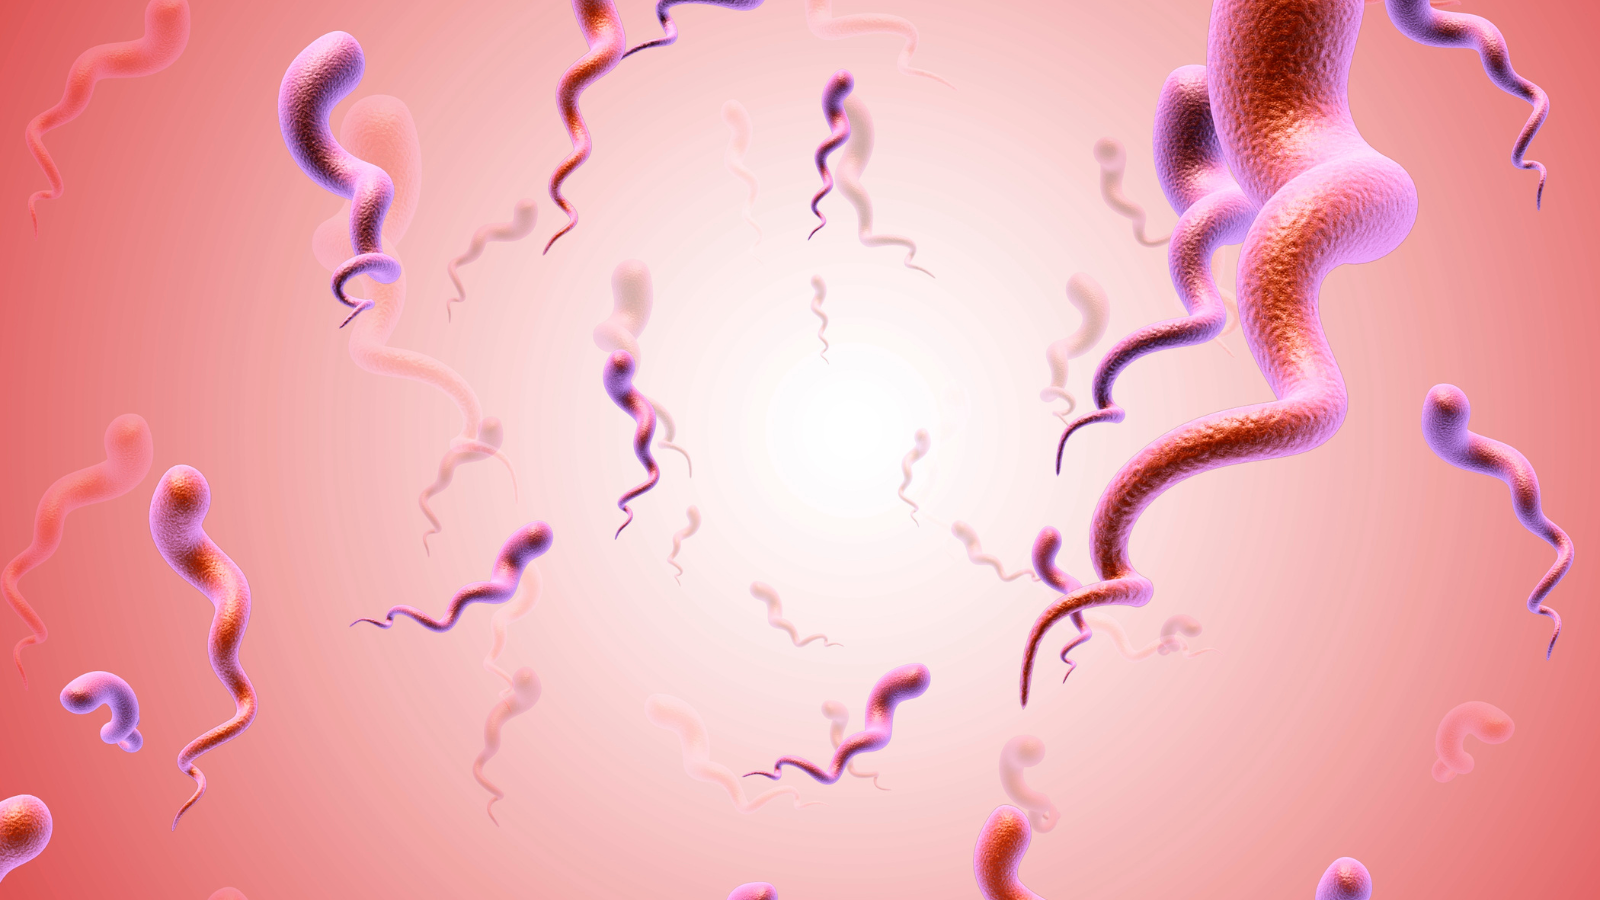 Syphilis bacteria illustration